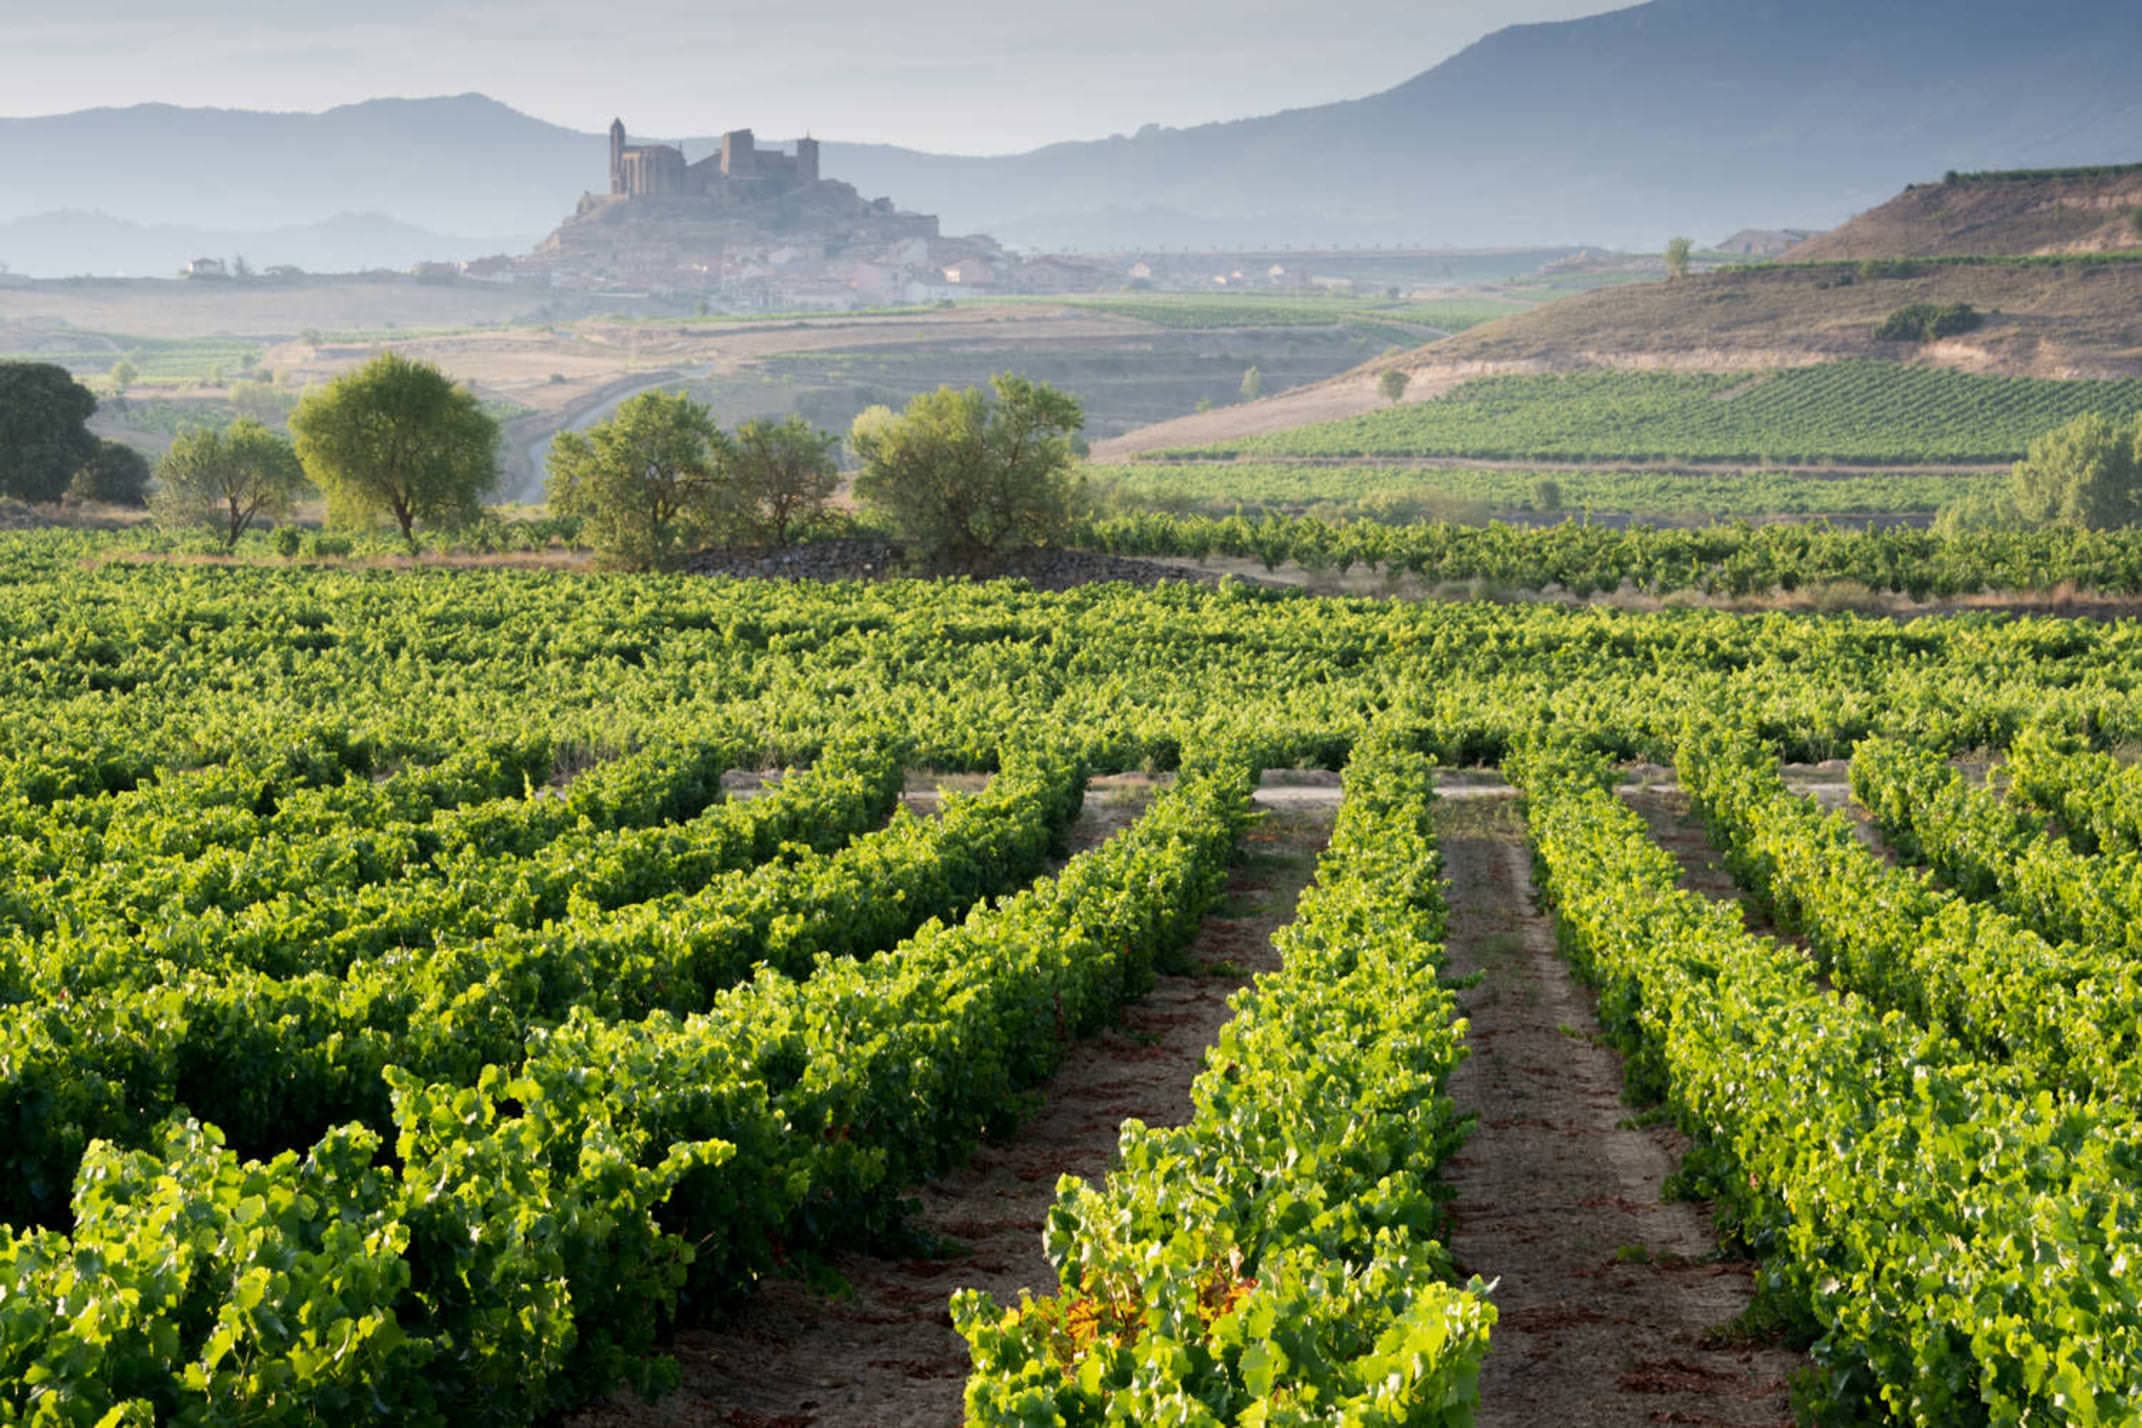 Spain rioja vineyard and san vicente de la sonsierra as background la rioja